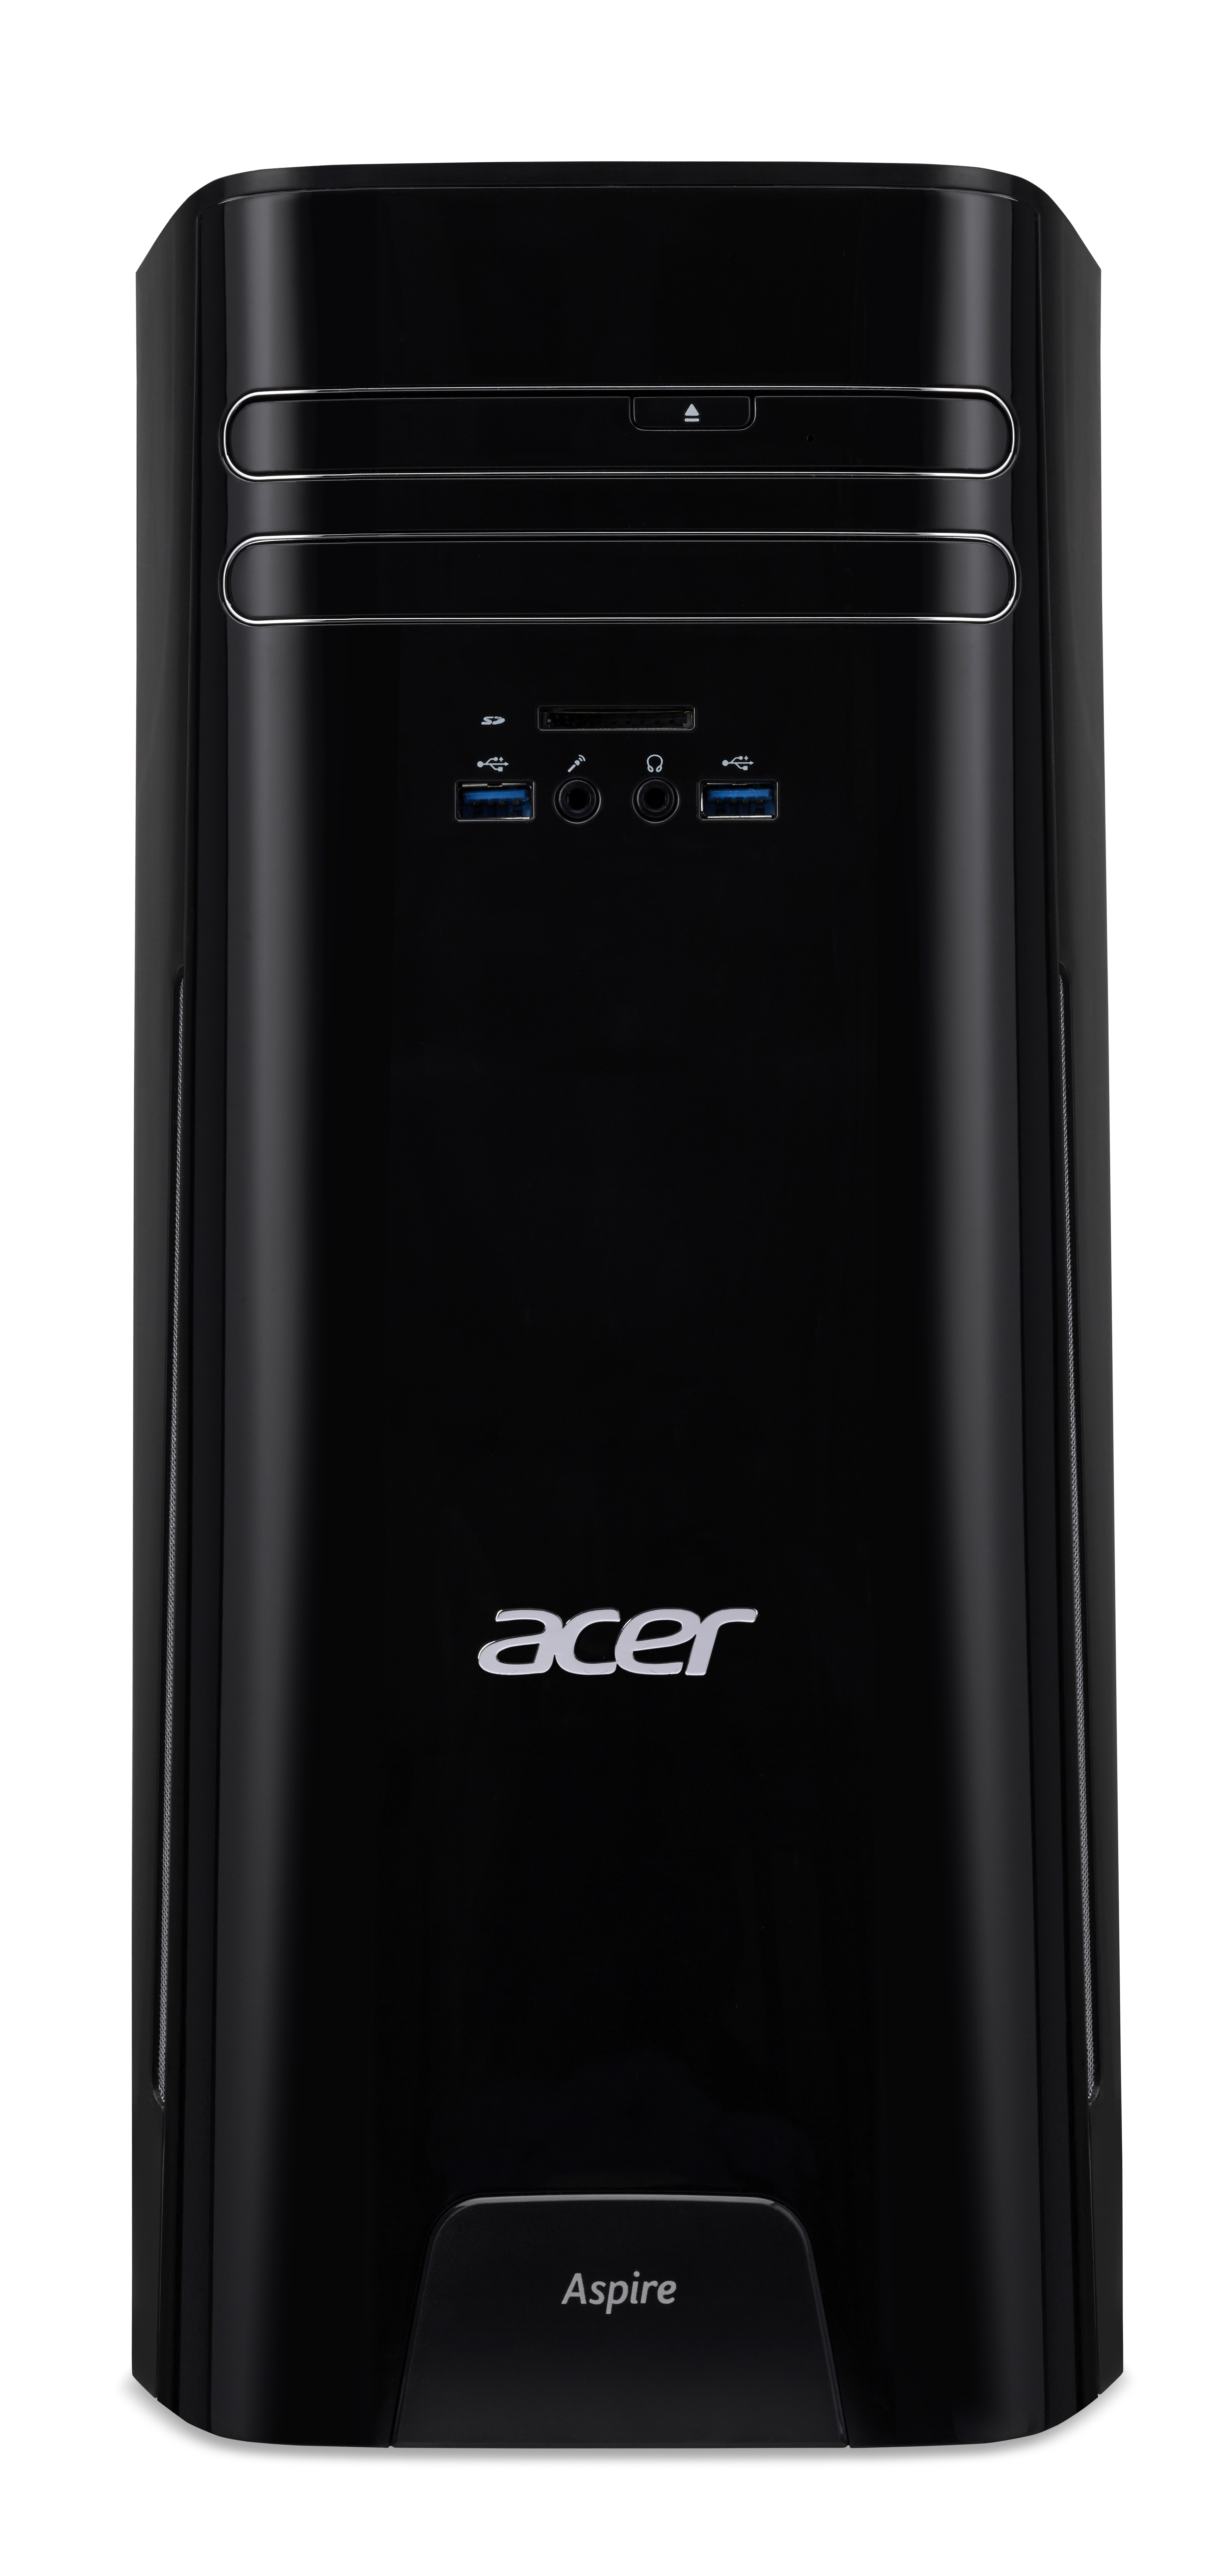 Computadora Acer Atc-780-Mo12, Core I5 7400, 8Gb, 2Tb, Windows 10